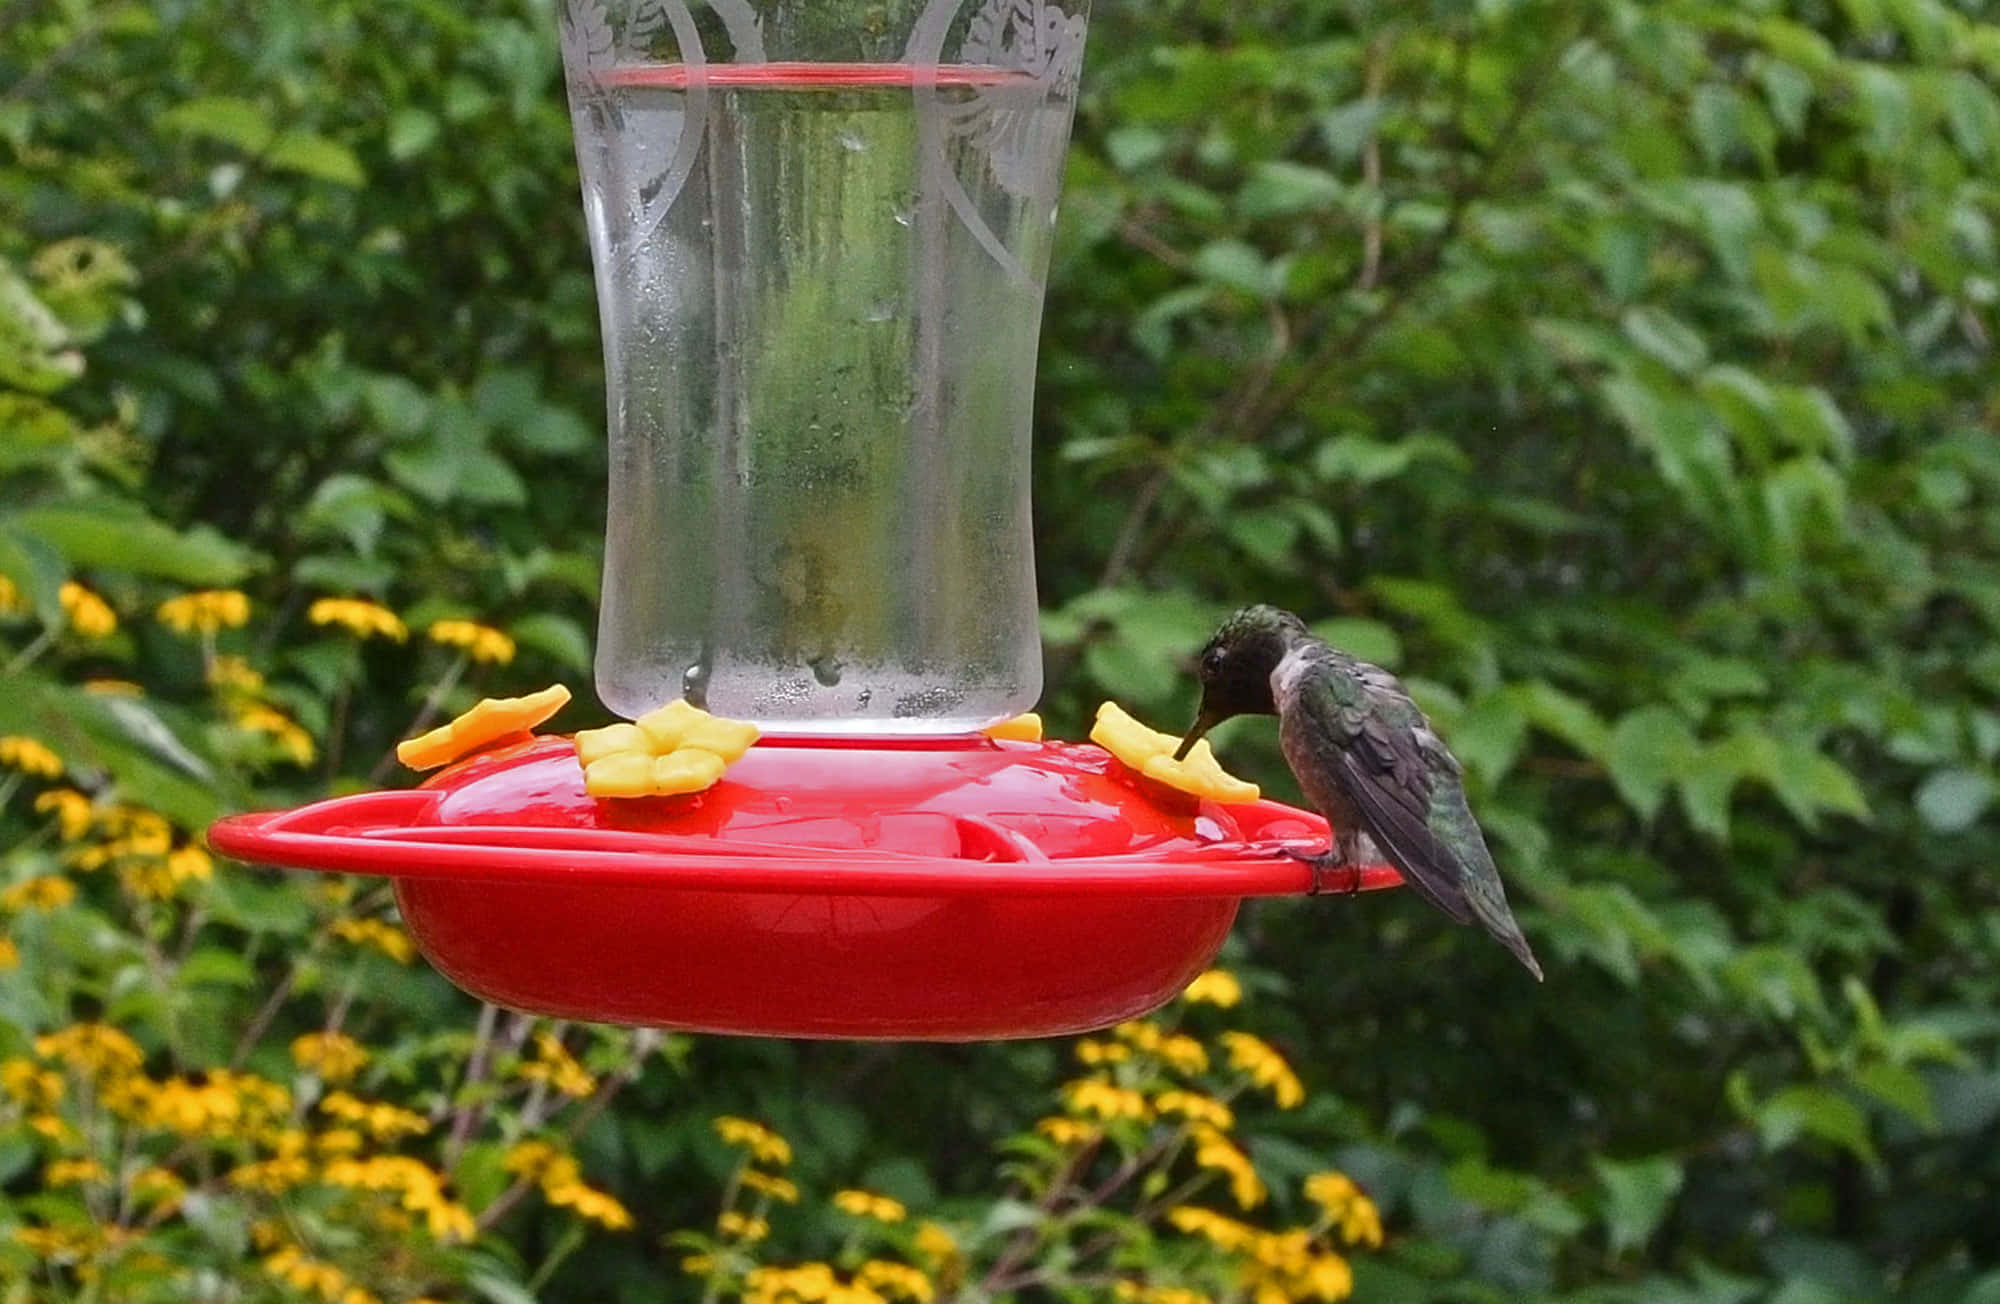 Hummingbird Pictures